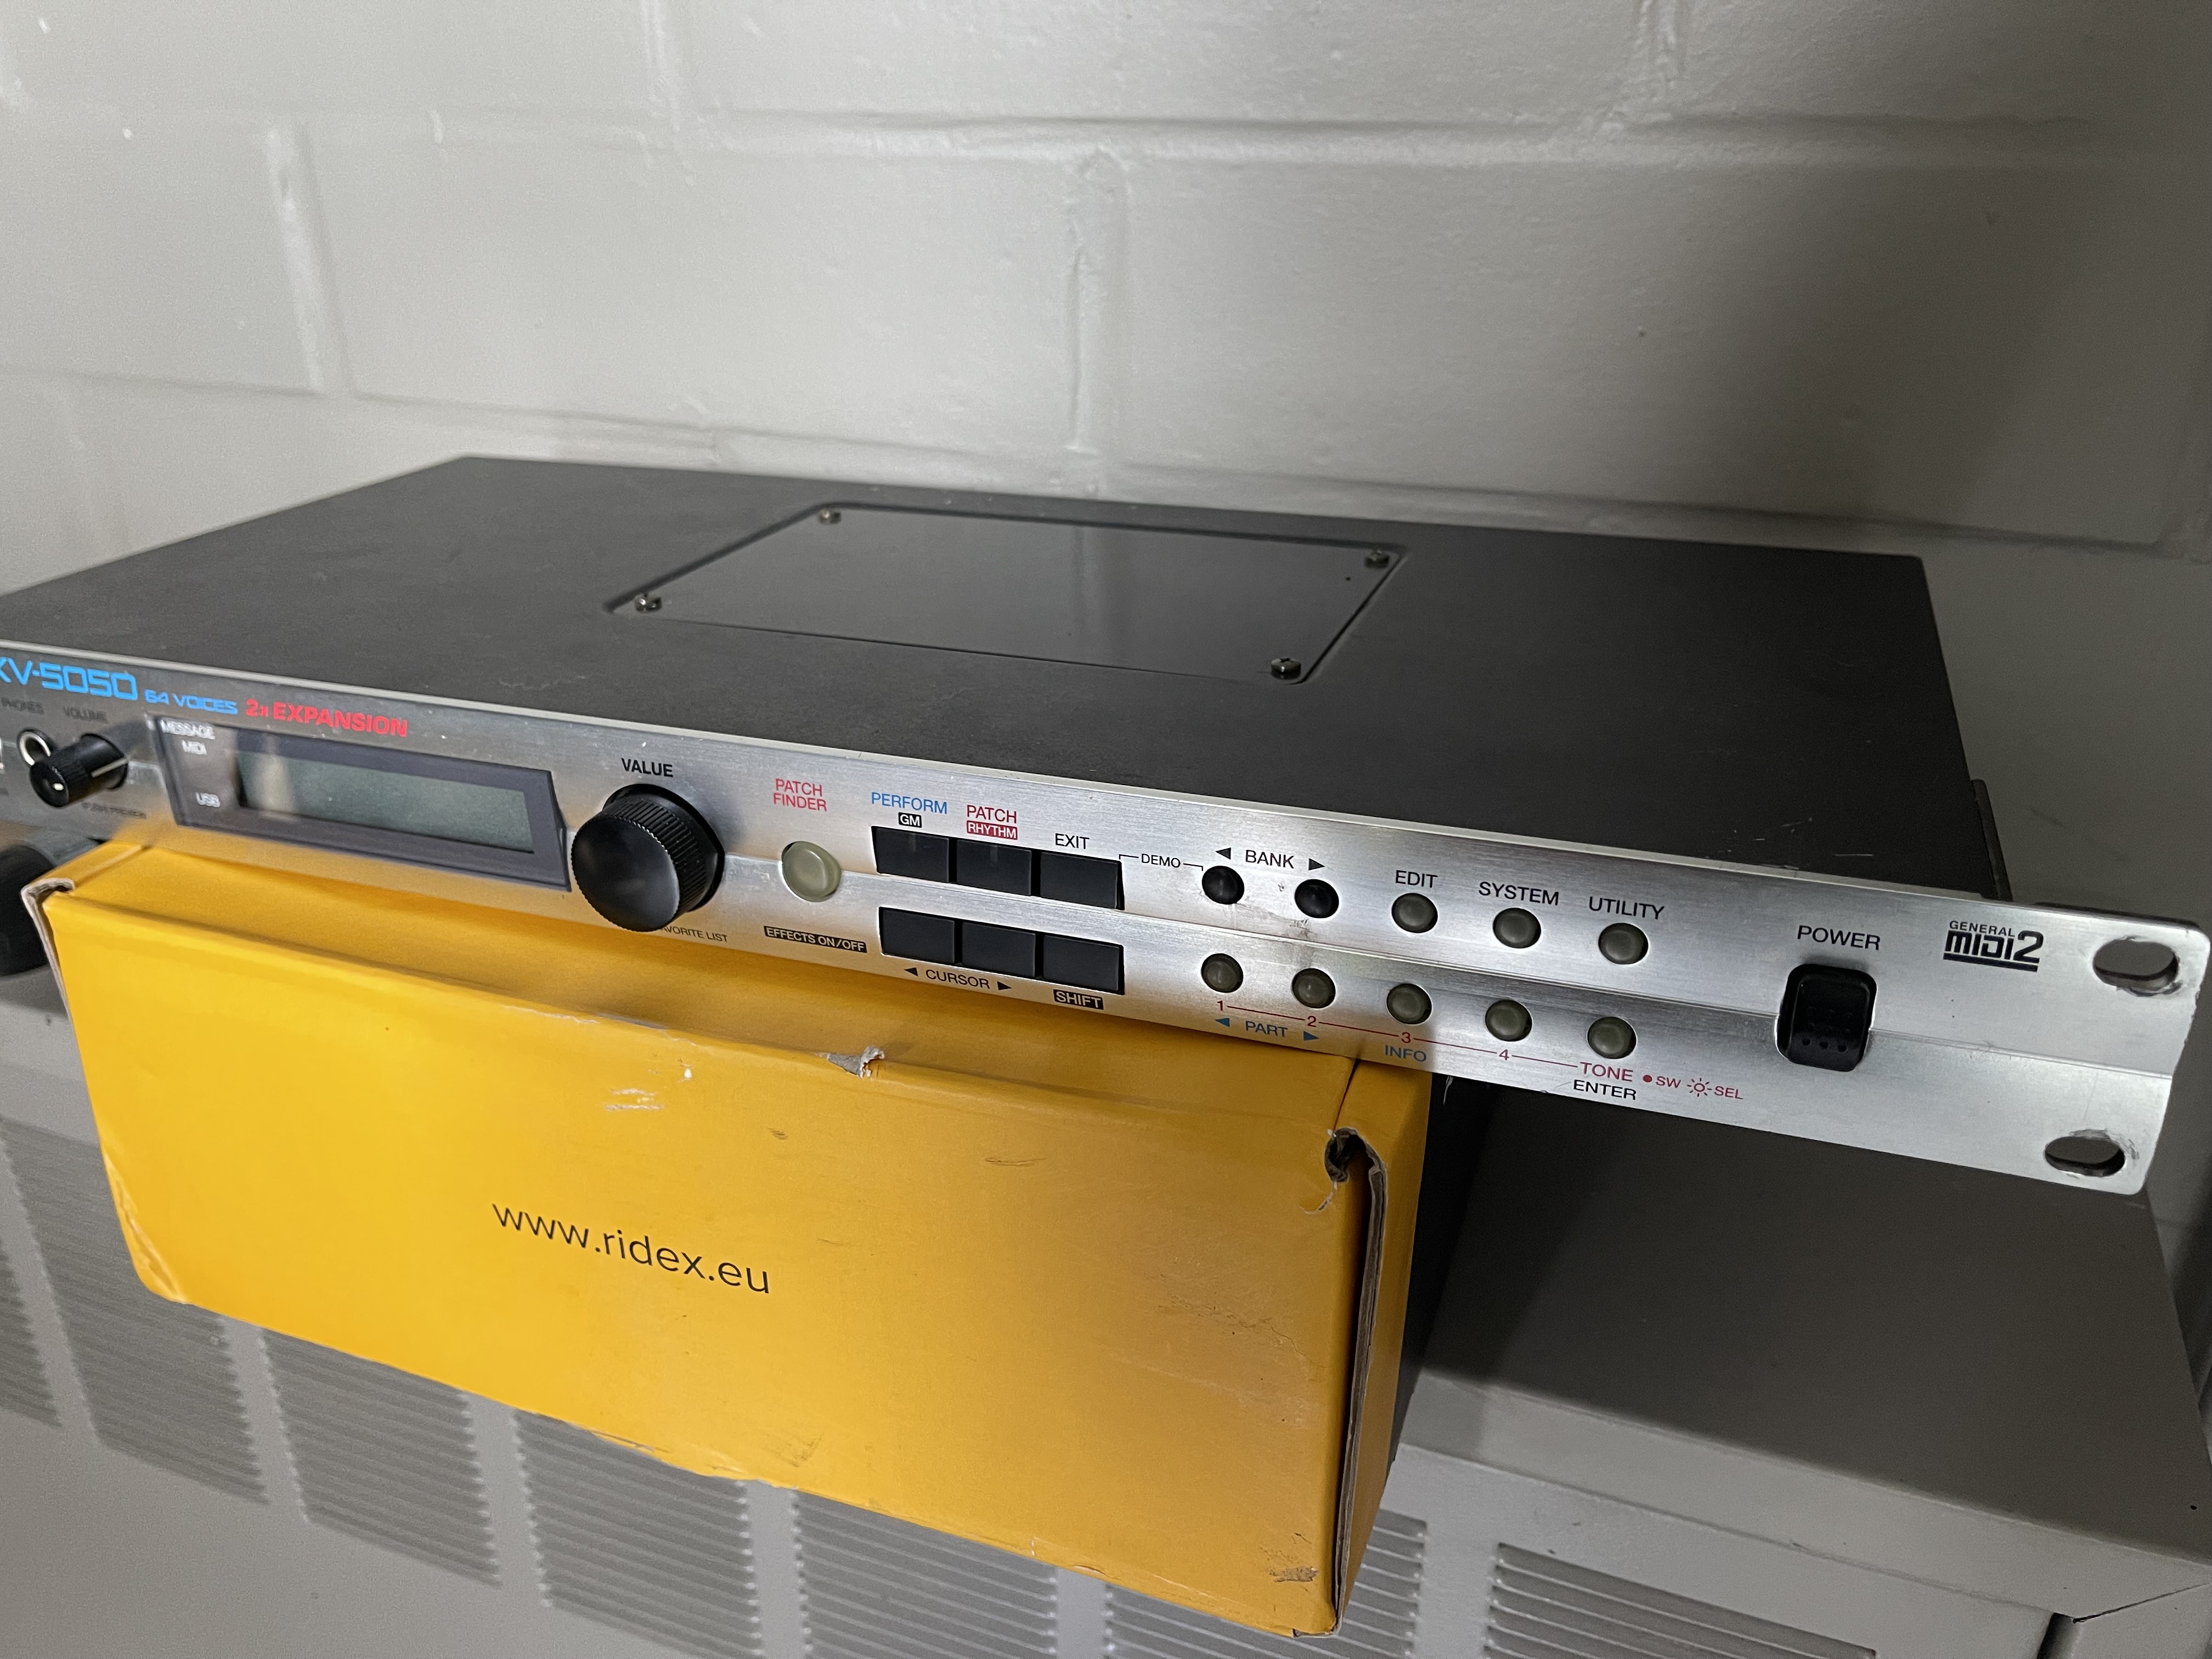 XV-5050 - Roland XV-5050 - Audiofanzine